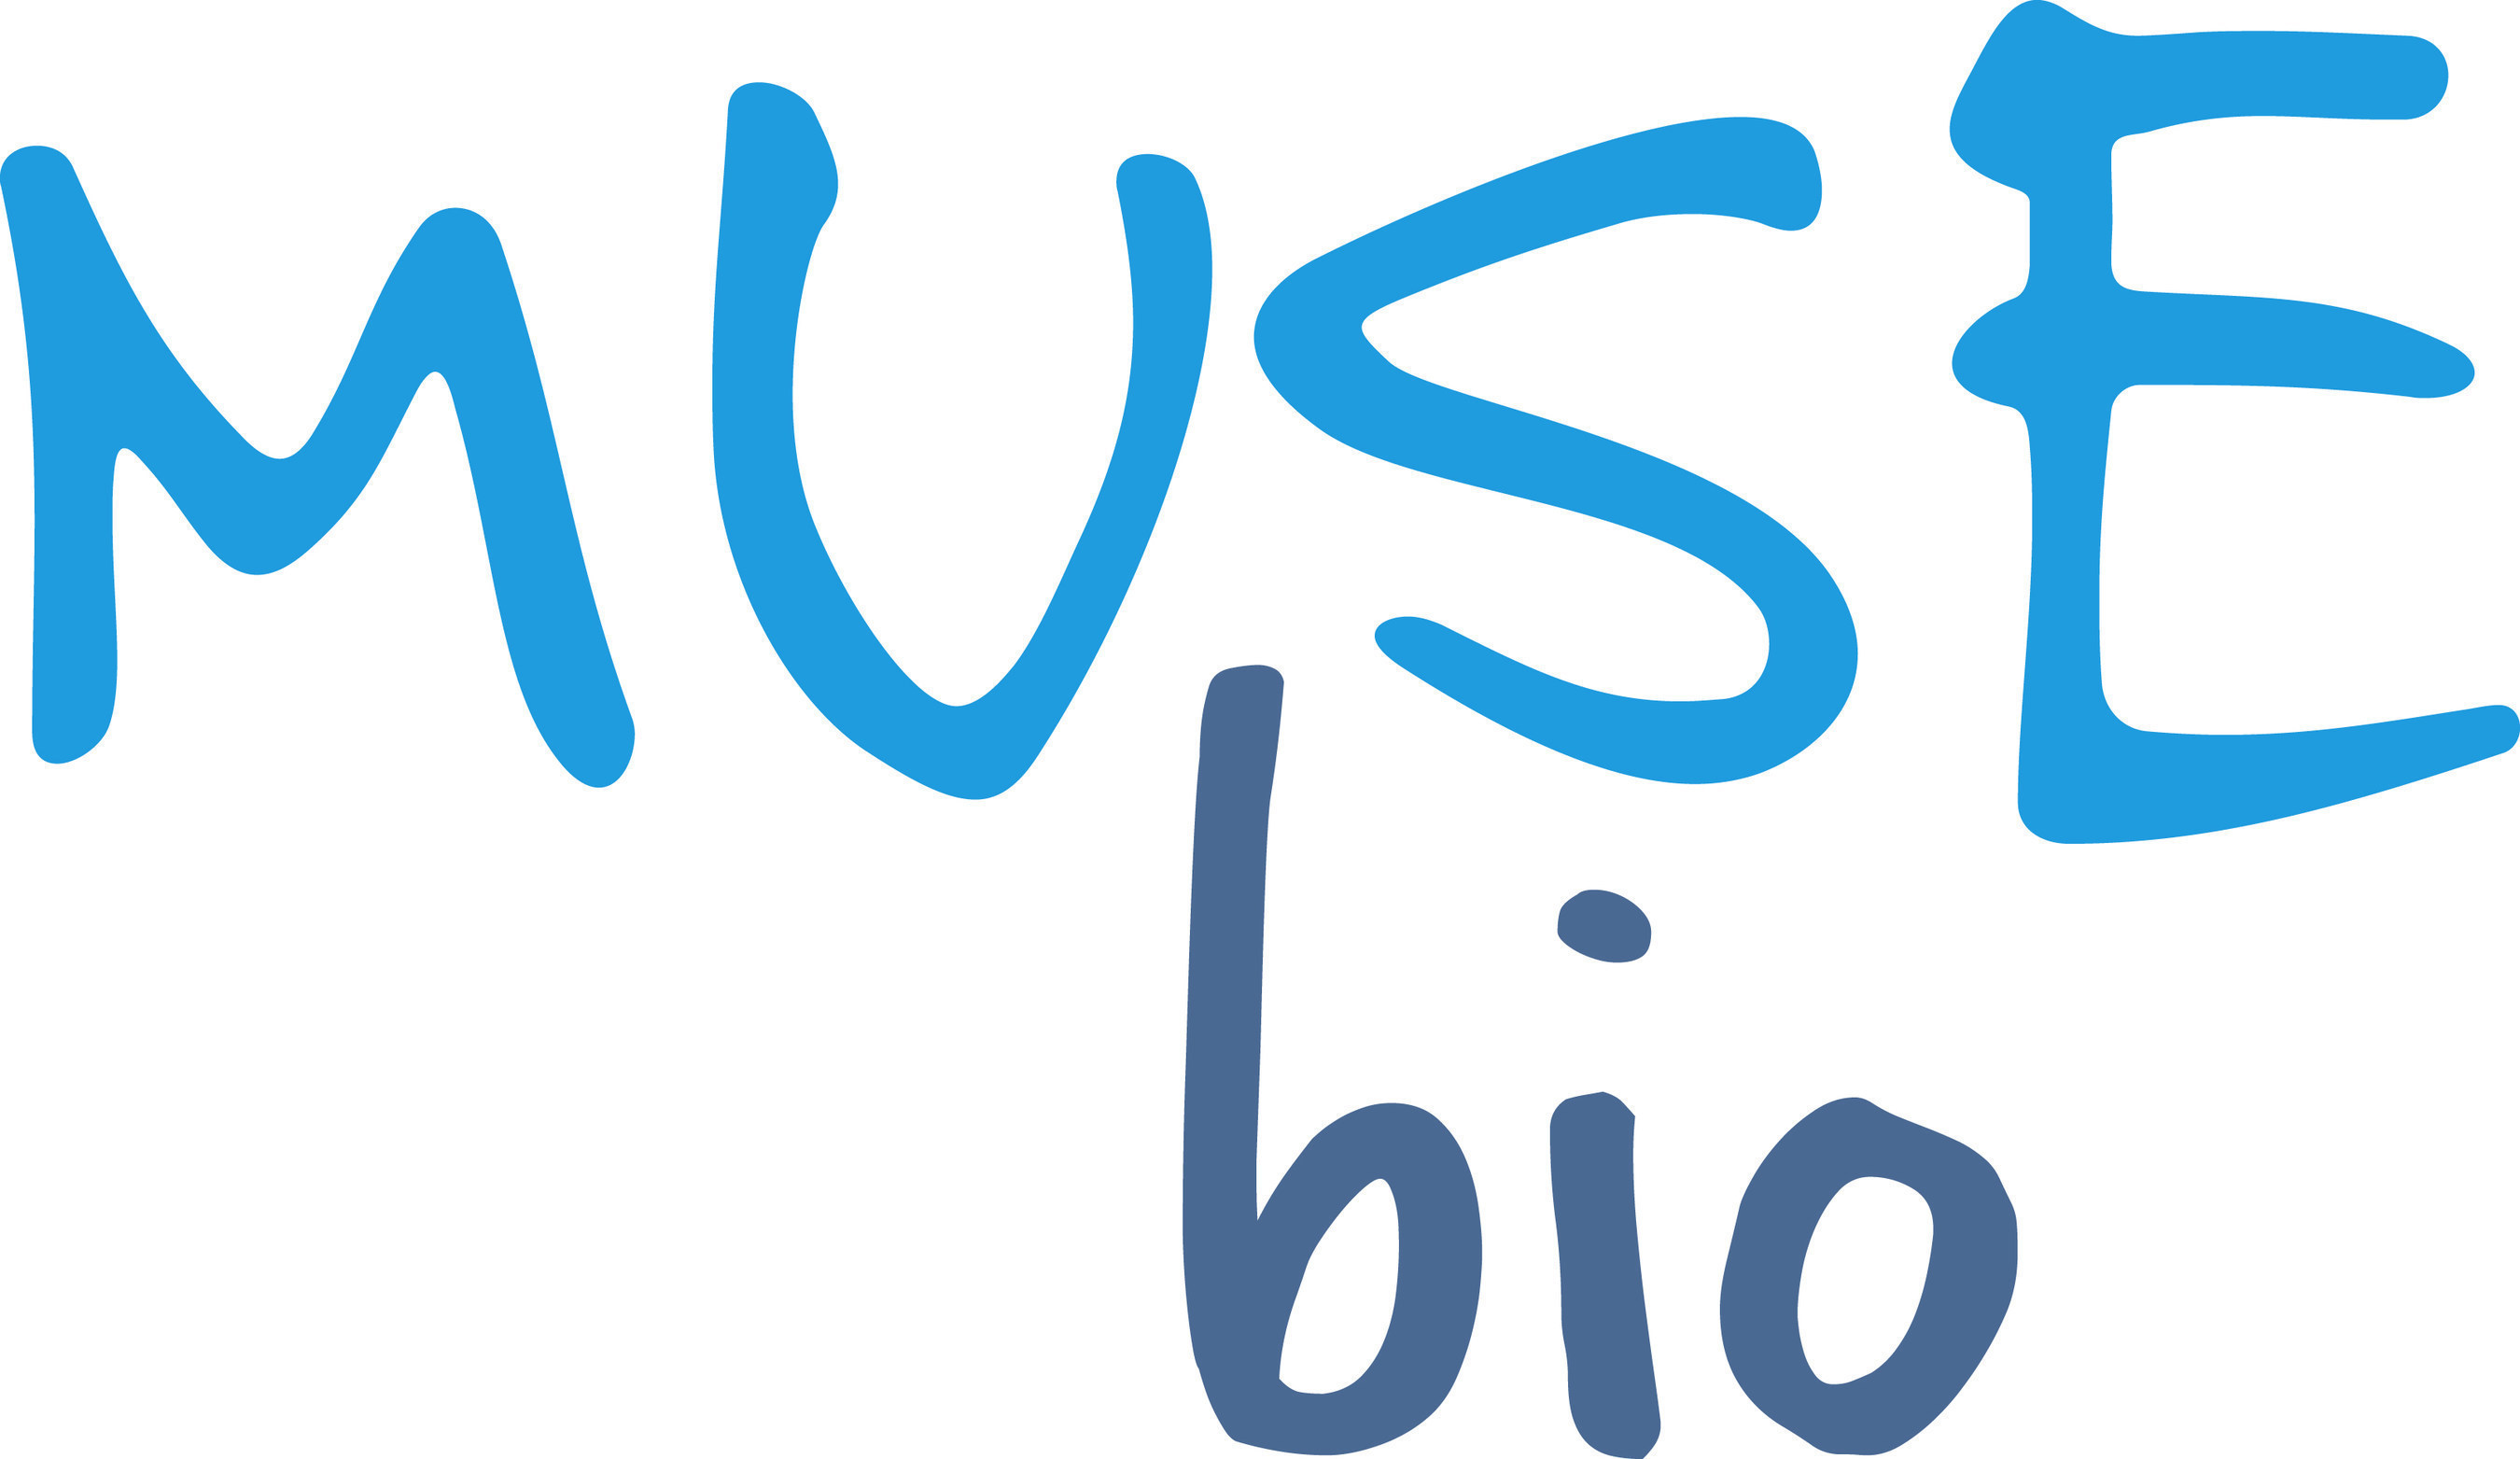 Muse bio logo